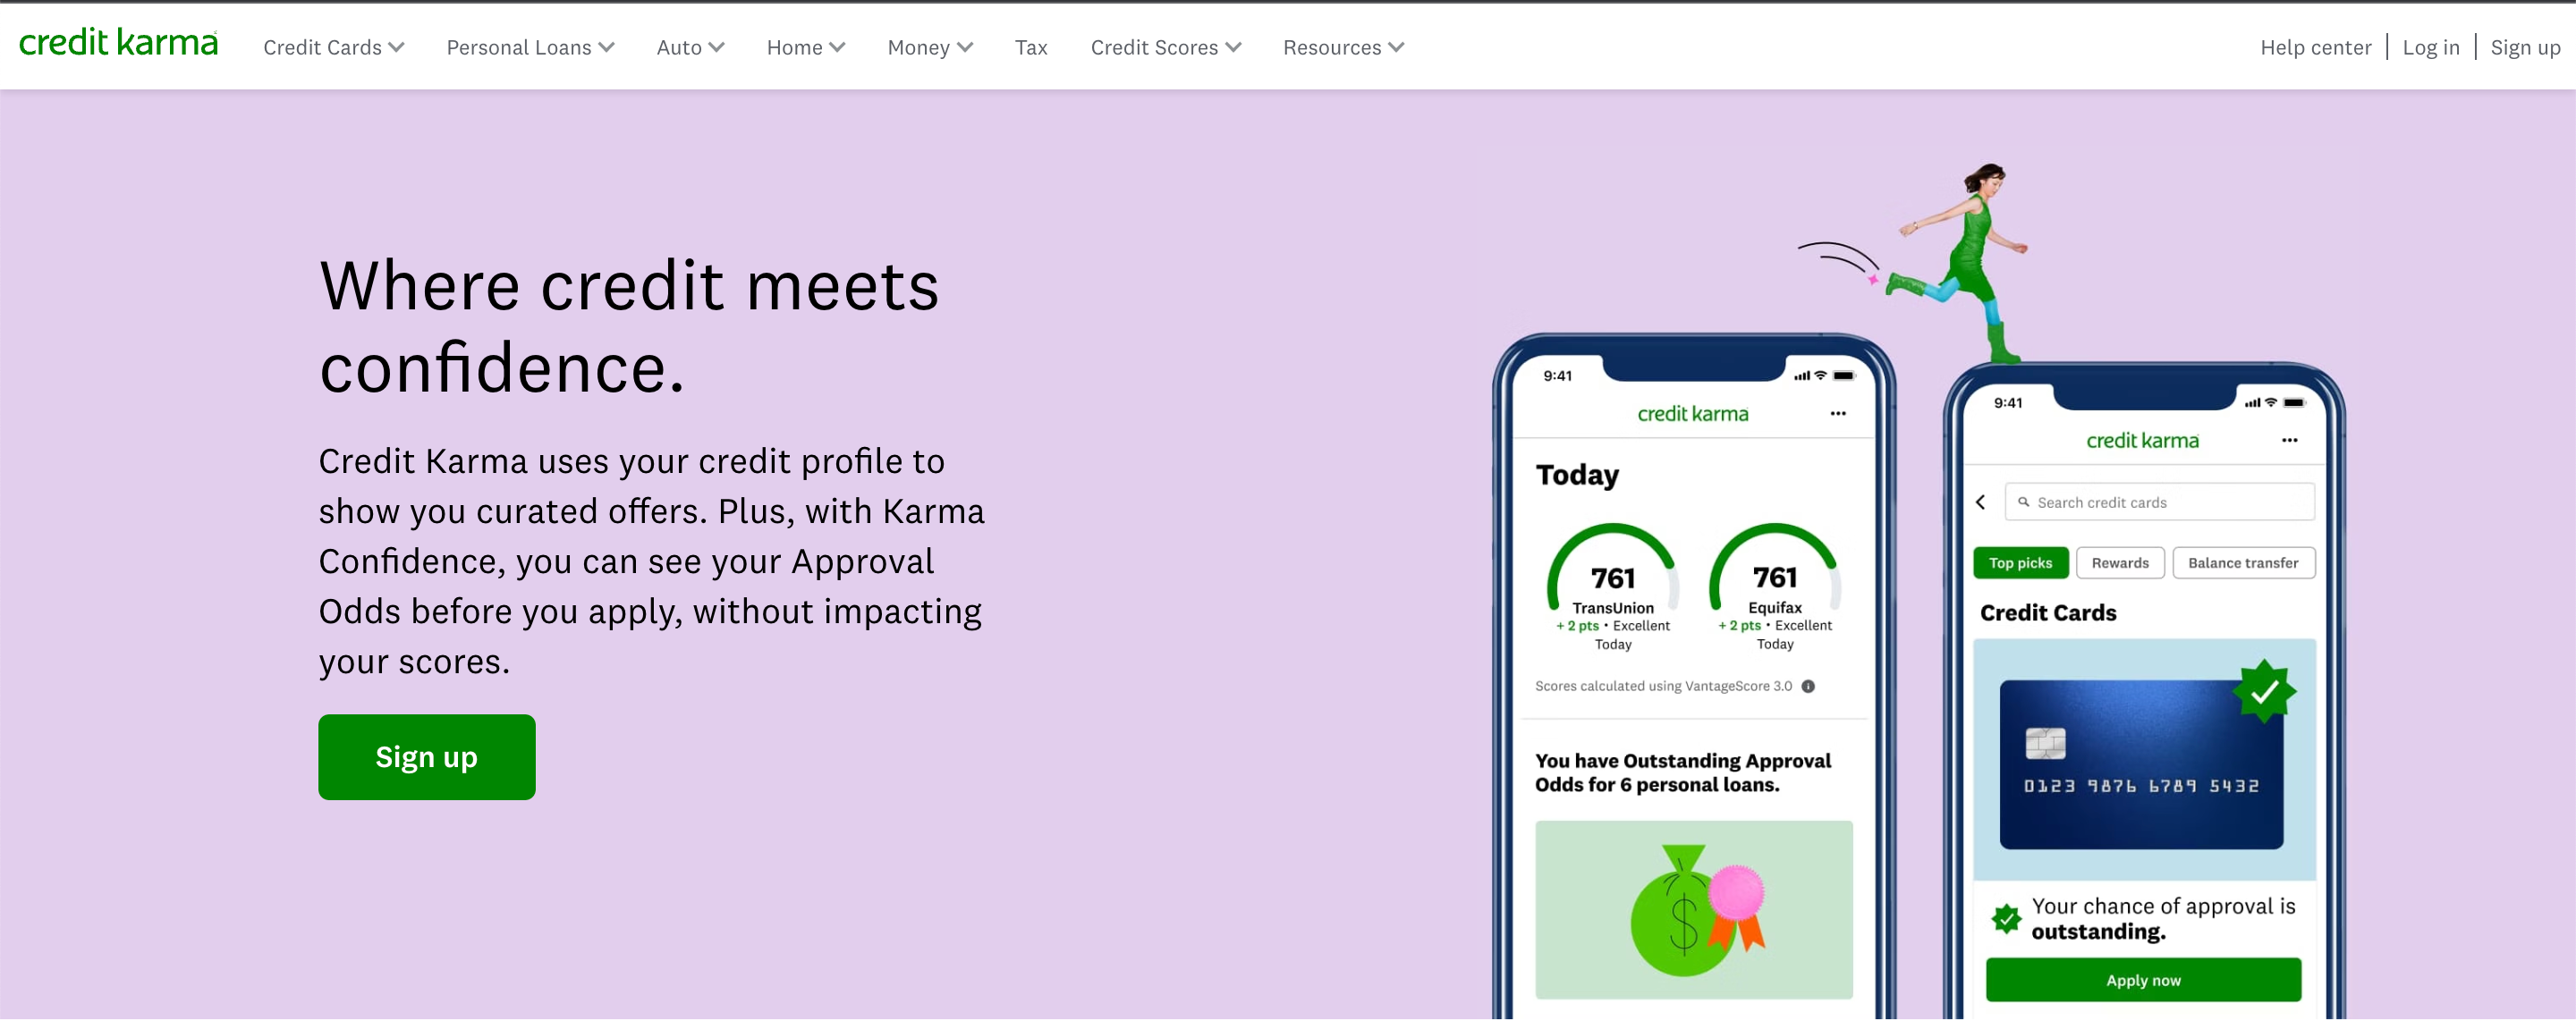 CreditKarma.com homepage screenshot